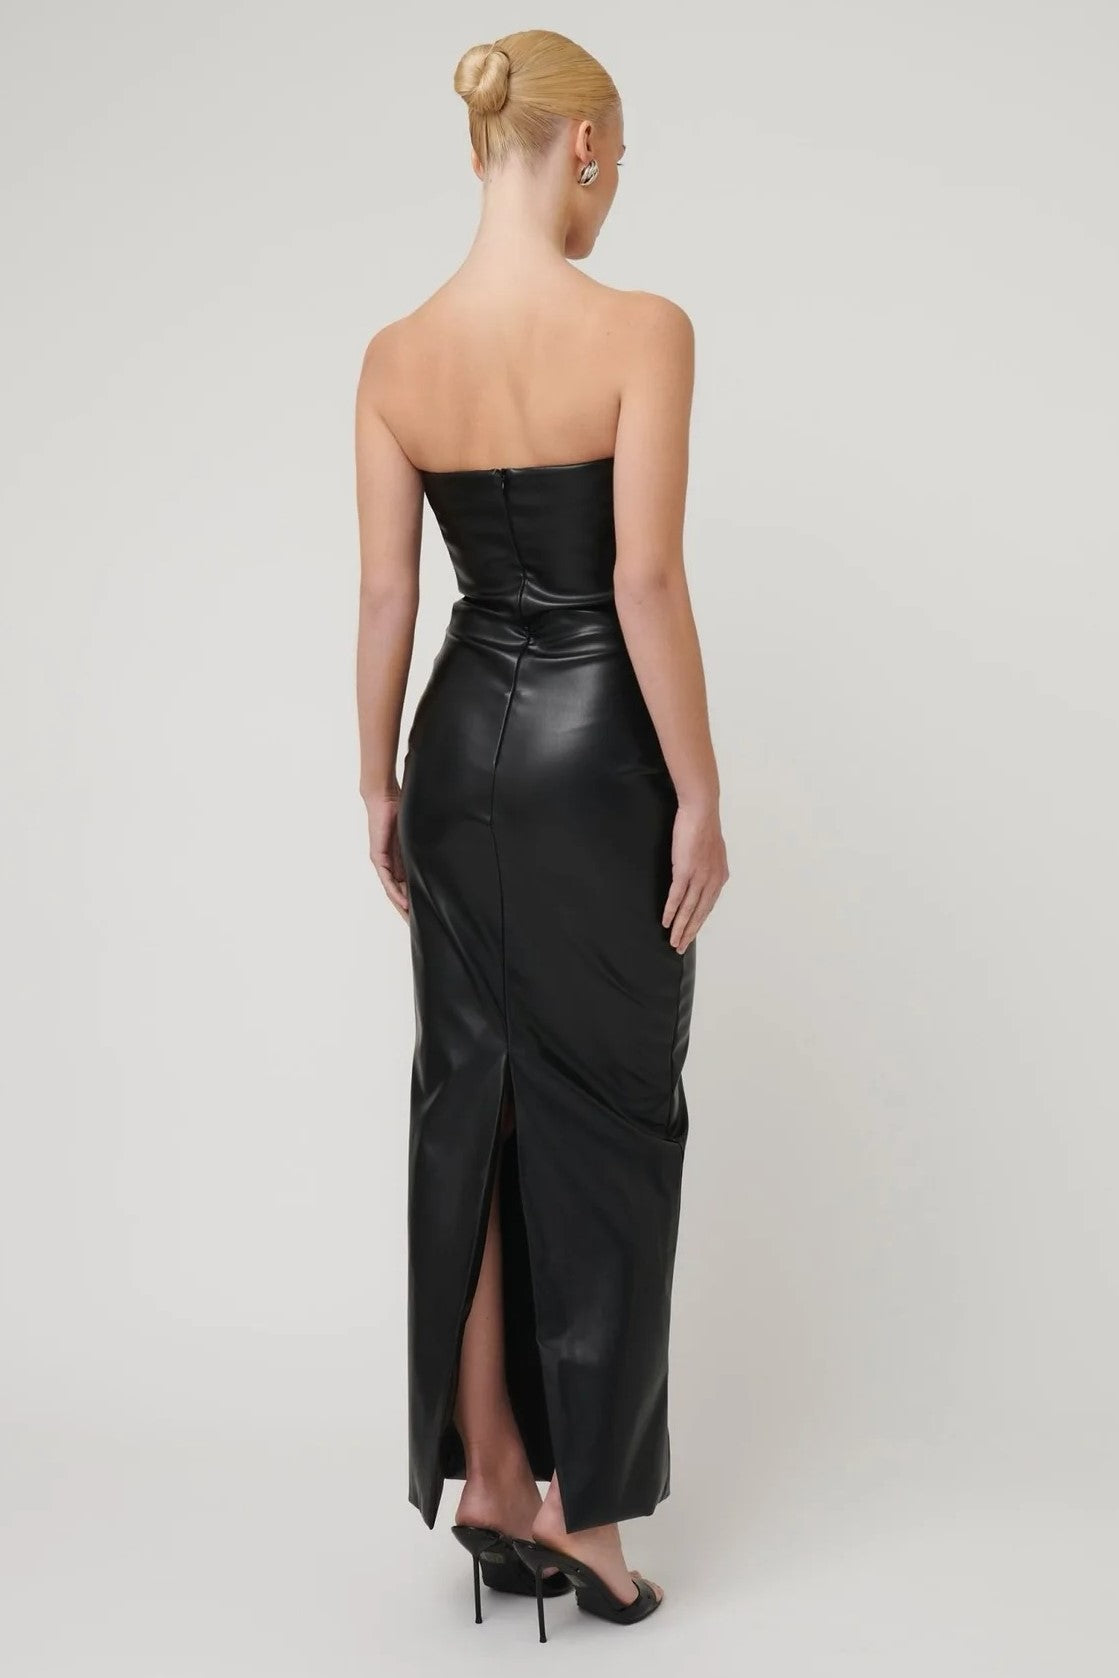 Elodie Dress - Faux Leather Black - SHOPJAUS - JAUS